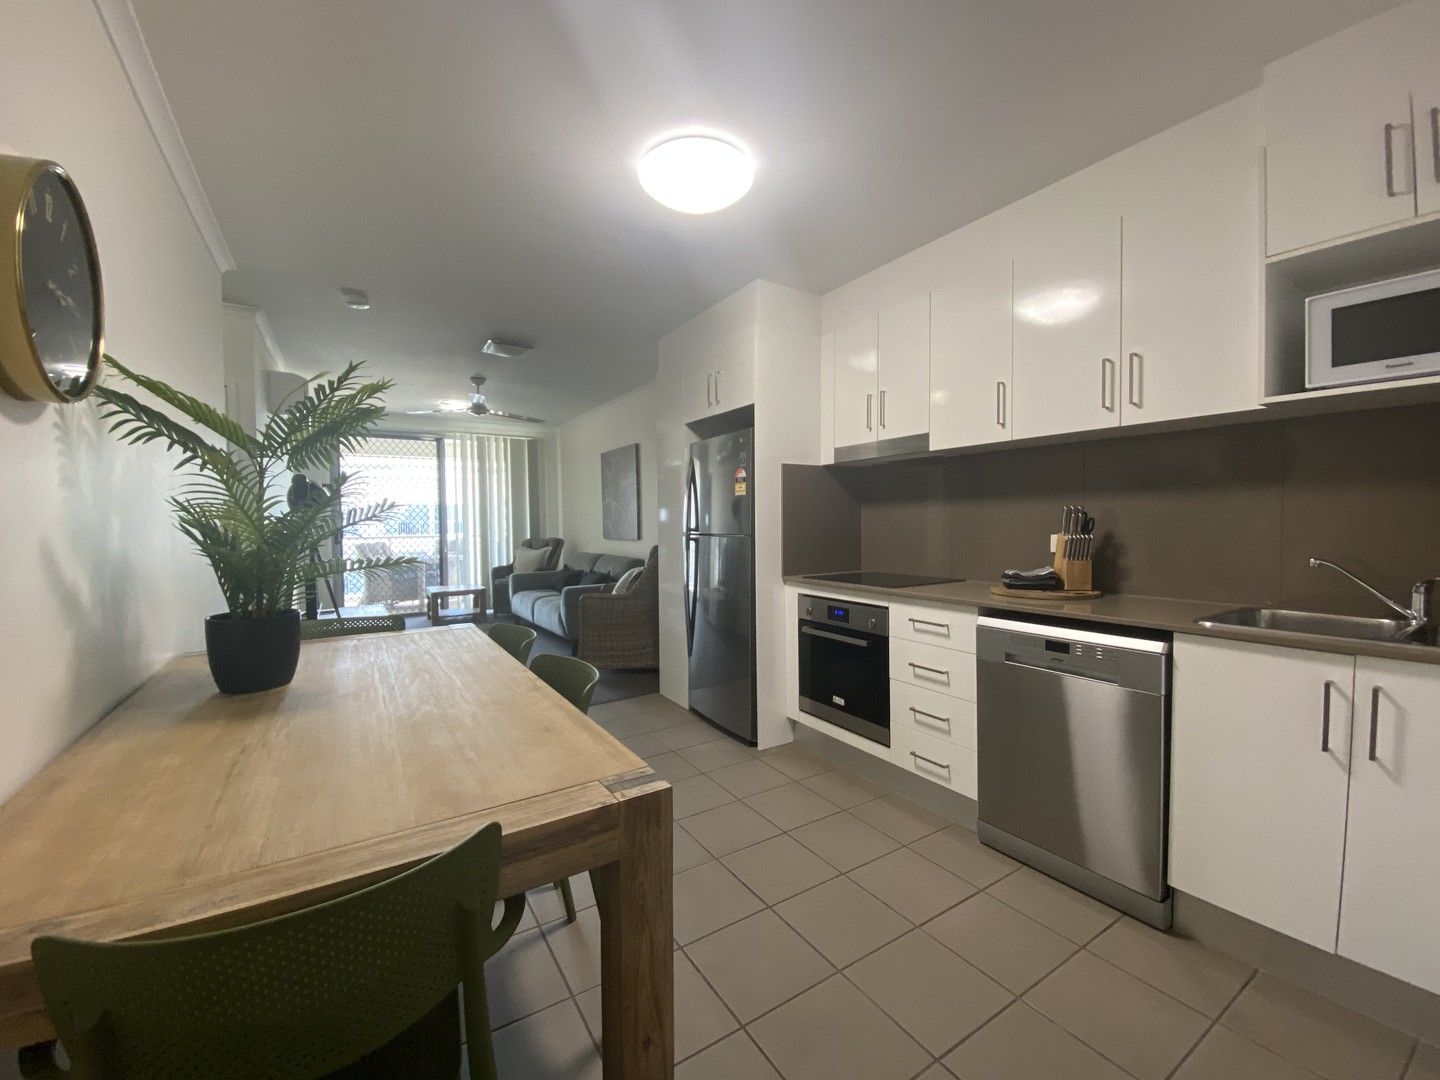 2 bedrooms Apartment / Unit / Flat in 25/11 Bacon Street MORANBAH QLD, 4744